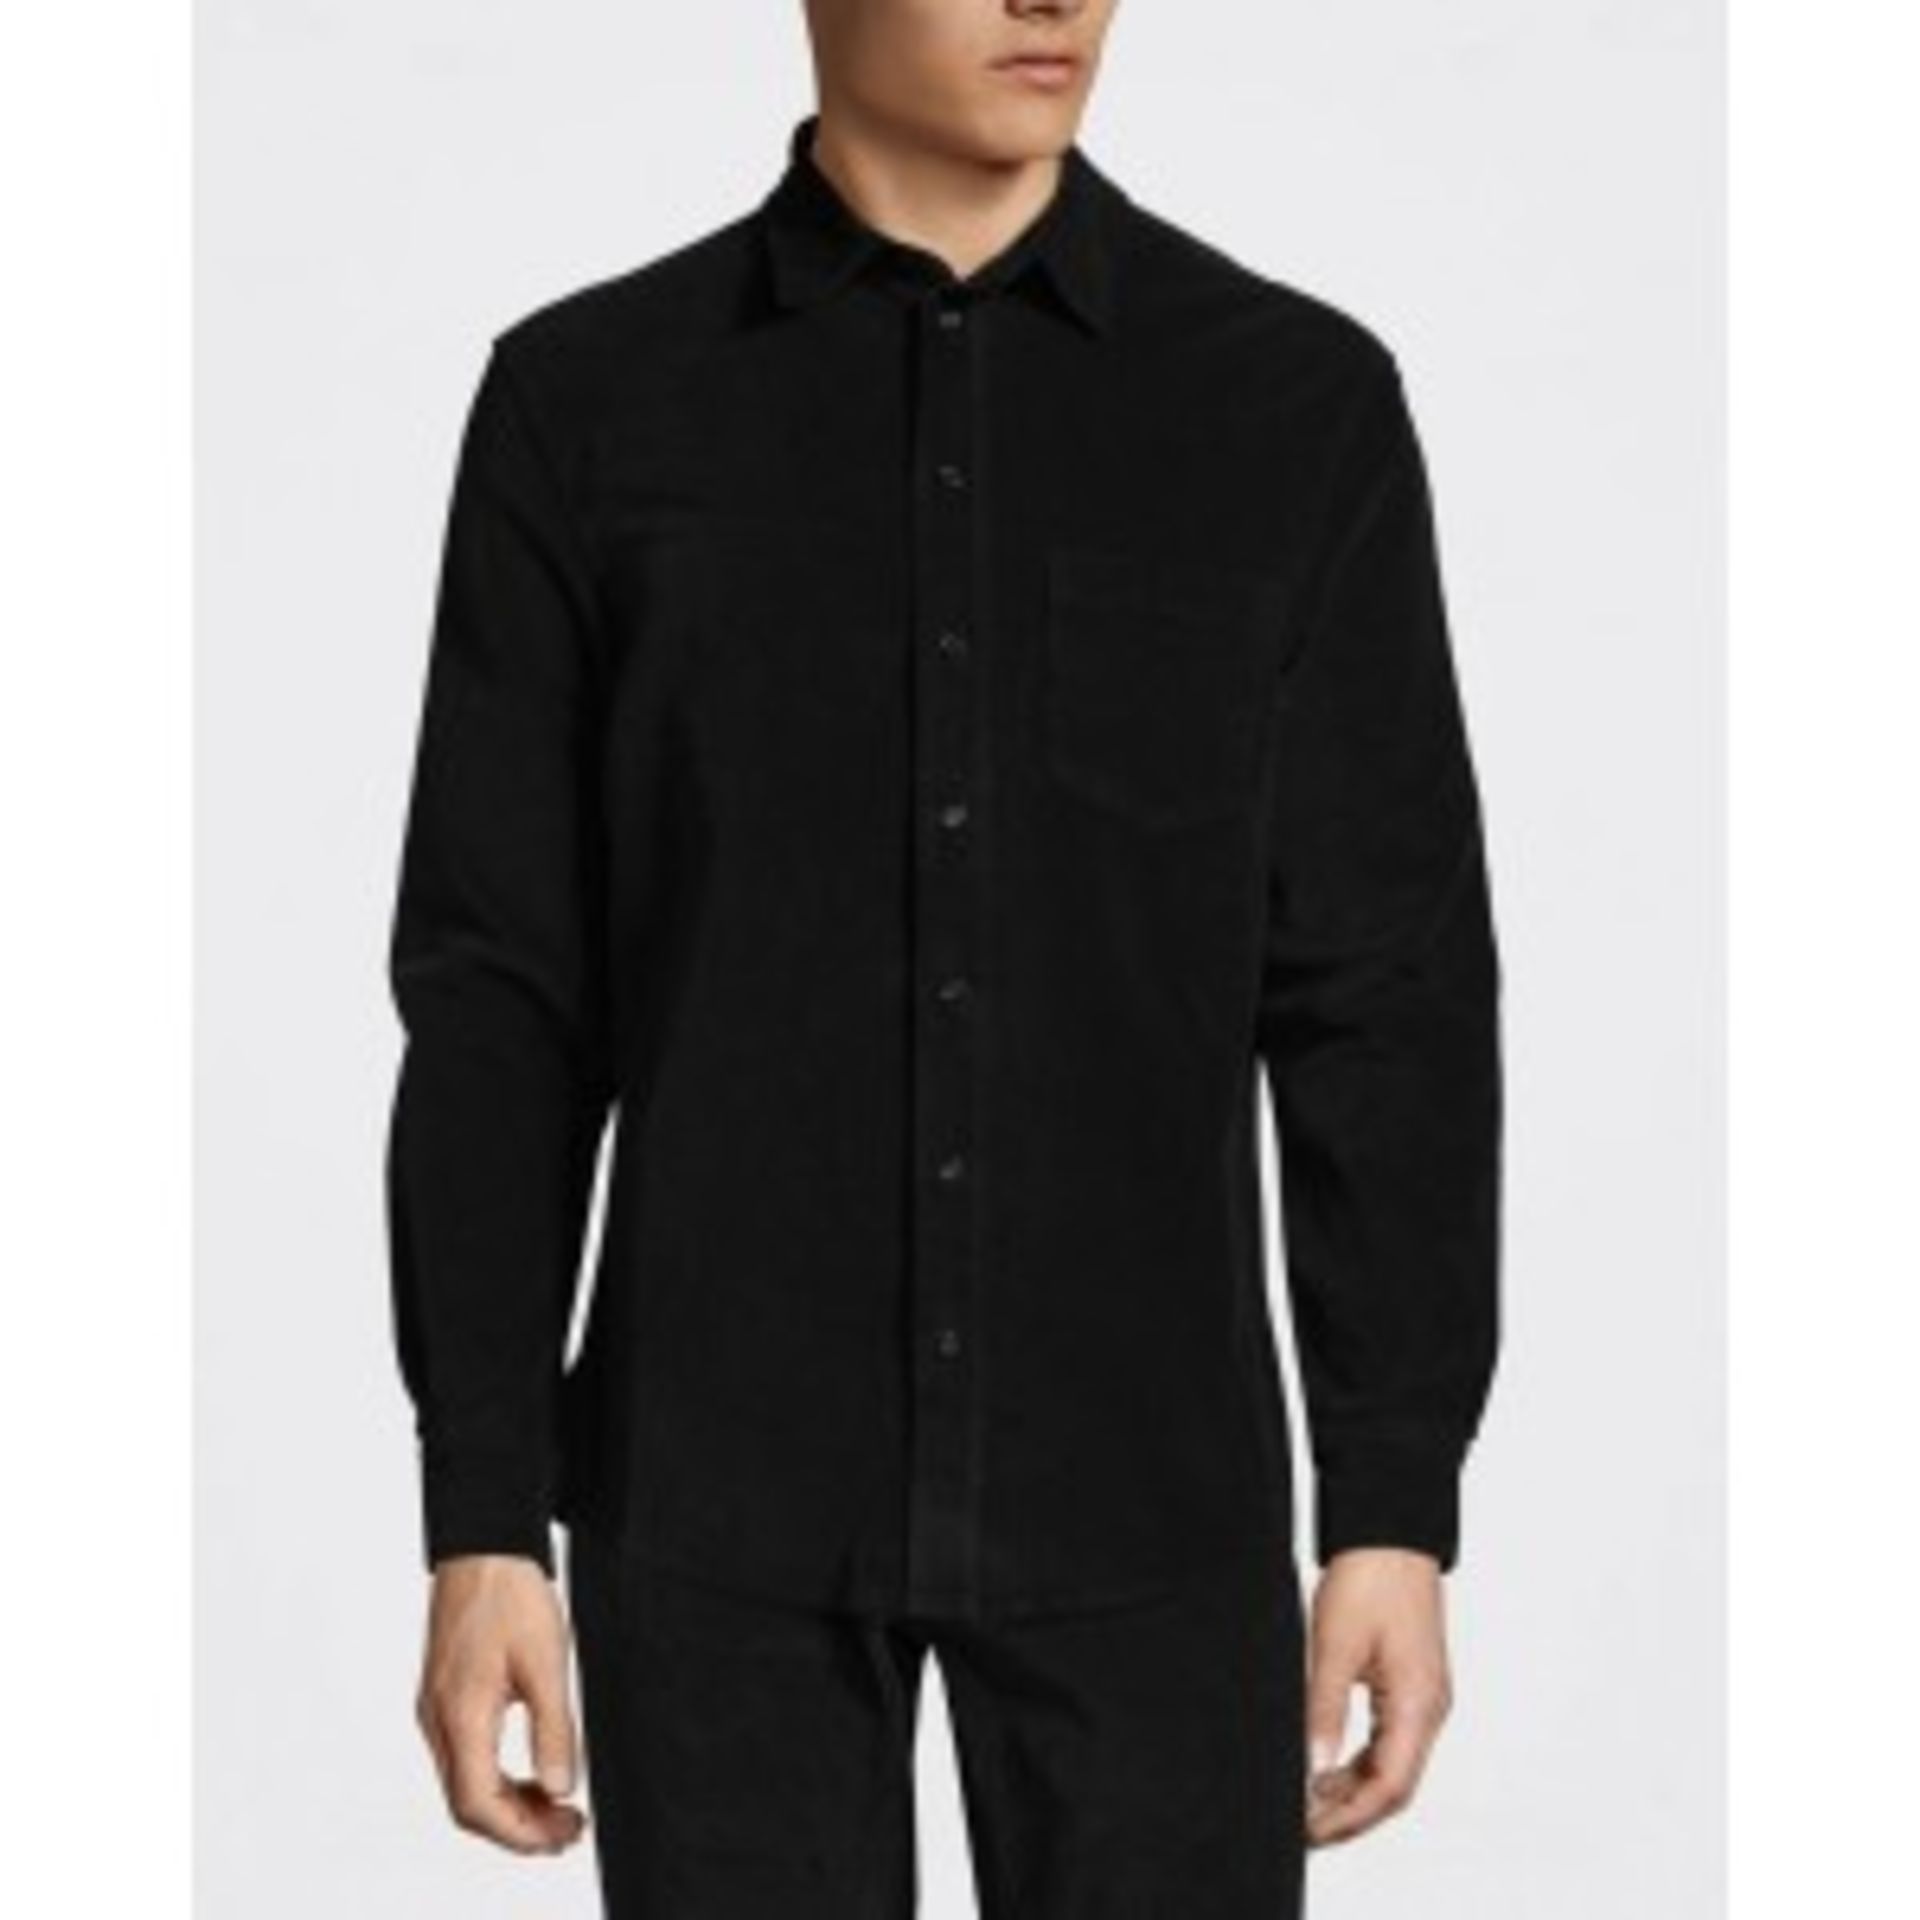 The Cords & Co. "Odd" Style, Uni-Sex Collard Long Sleeve Shirt(Black) Small, Medium, Large, X-Large